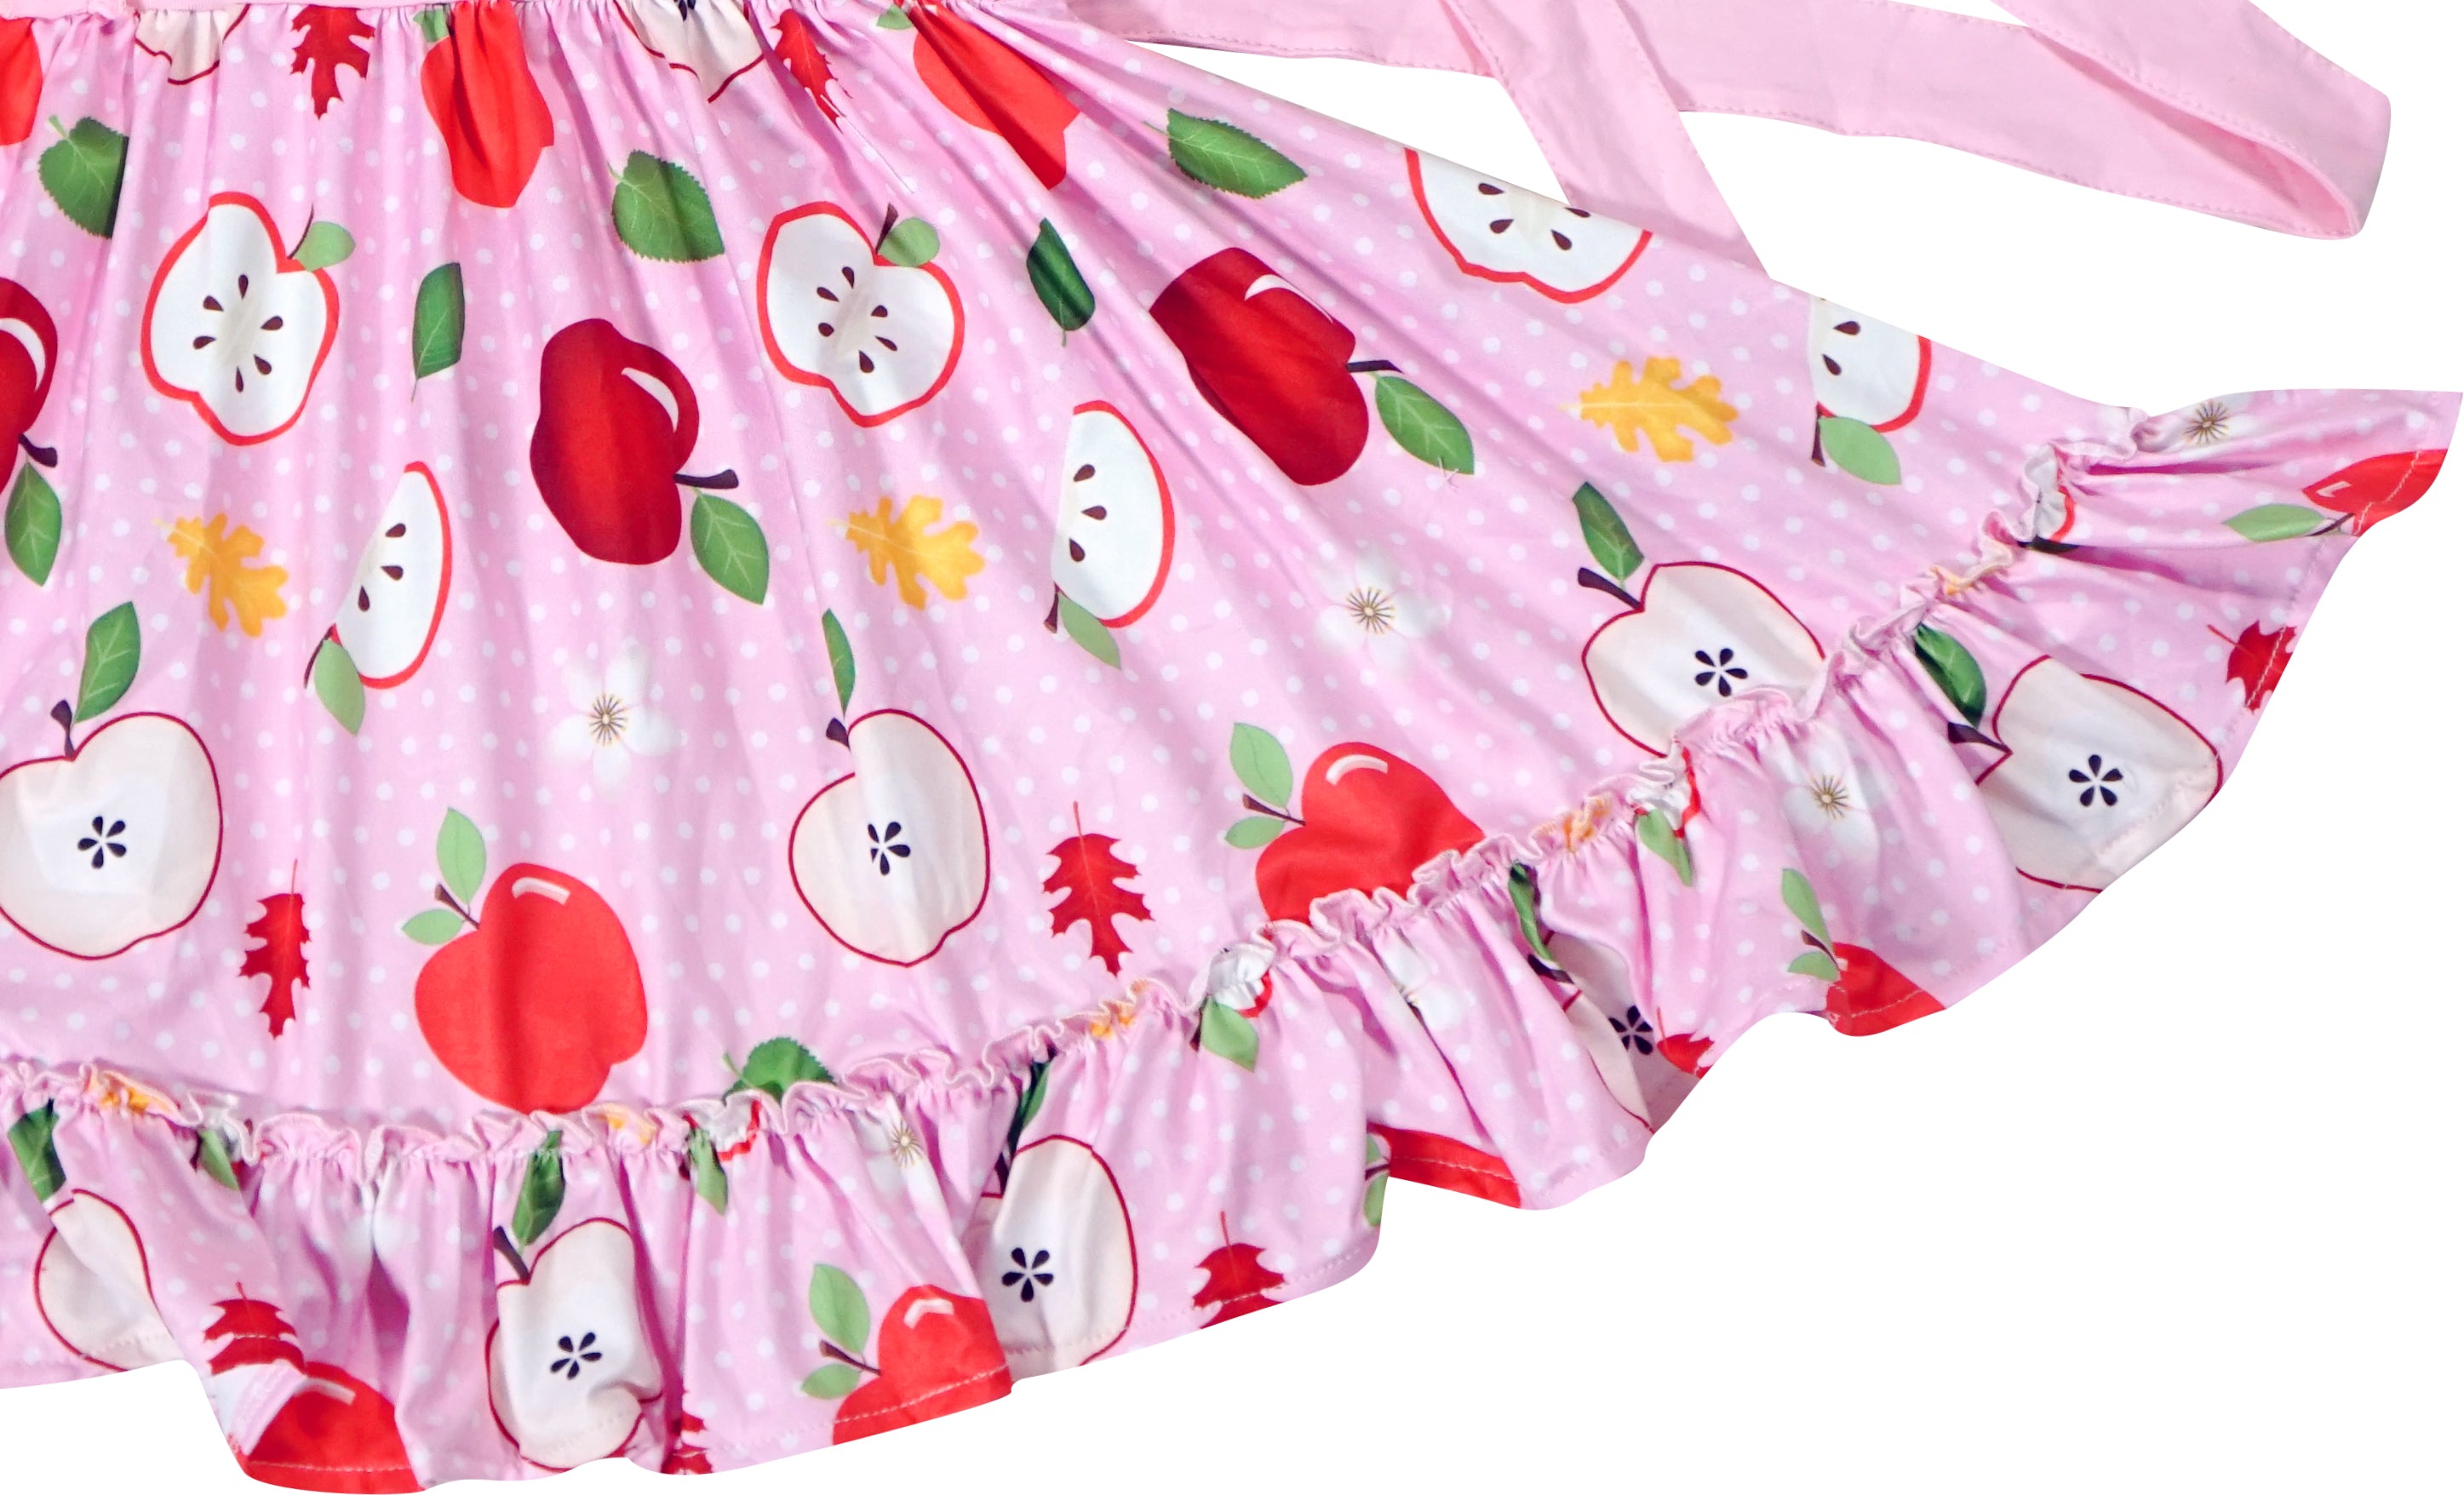 Toddler Little Girl Back To School Apple Pink Polka Dot Knit Twirl Dress - Pink - Angeline Kids